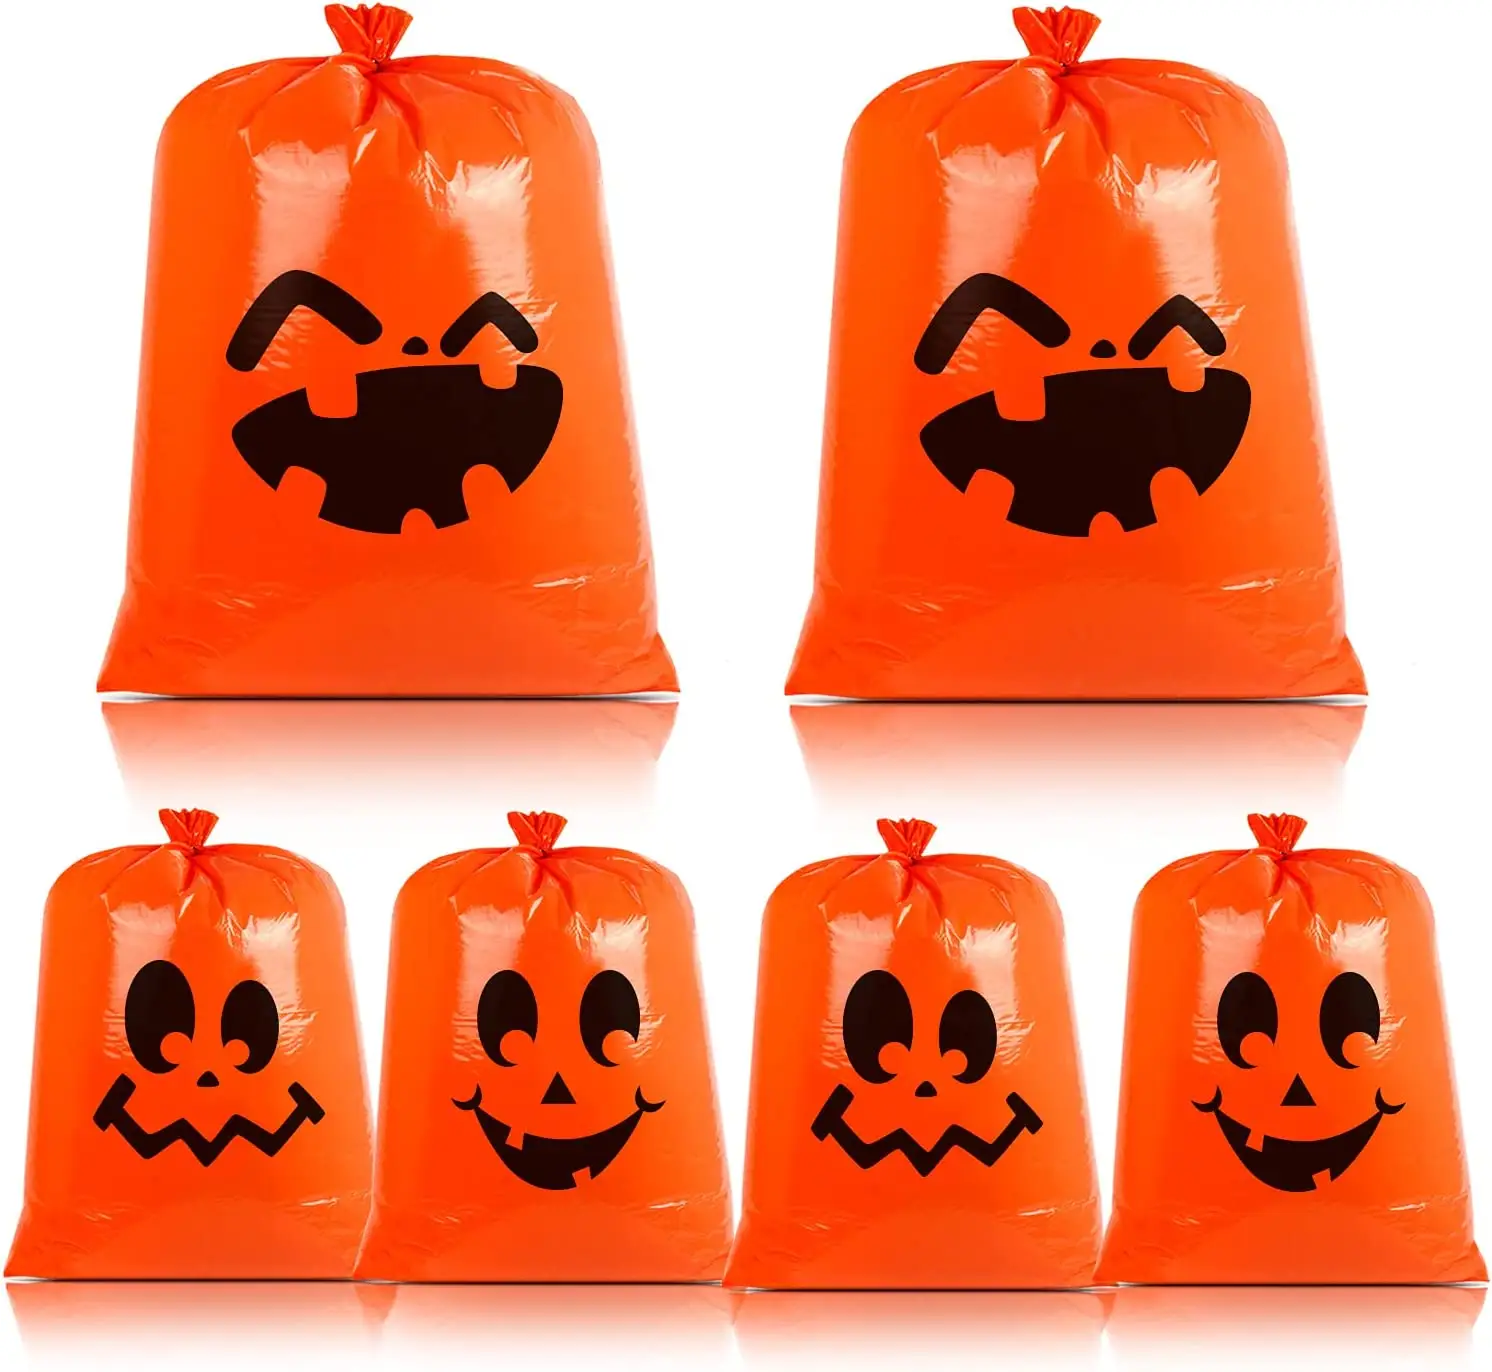 Spot Goods Giant Jack-o-lantern Pumpkin Lawn Bag - Pack of 9 with Twist Ties on sale